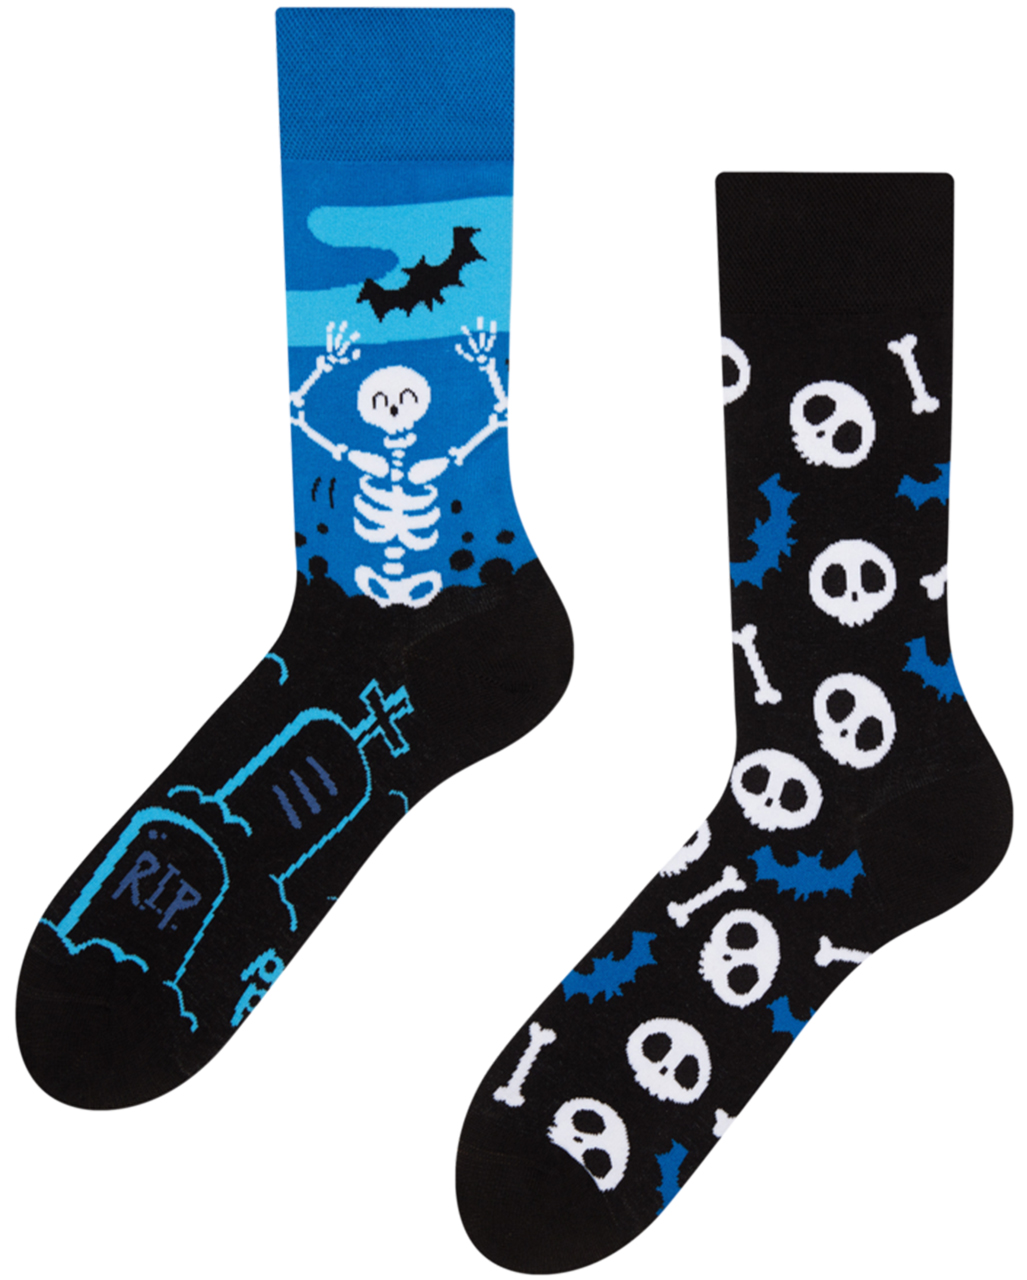 EROSPA® 3D Knochen Skelett Socken Unisex Damen Herren 35-42 Halloween Fasching Karneval